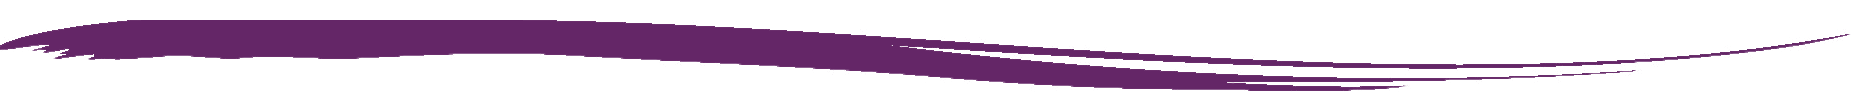 Northeast Arc Purple wave logo